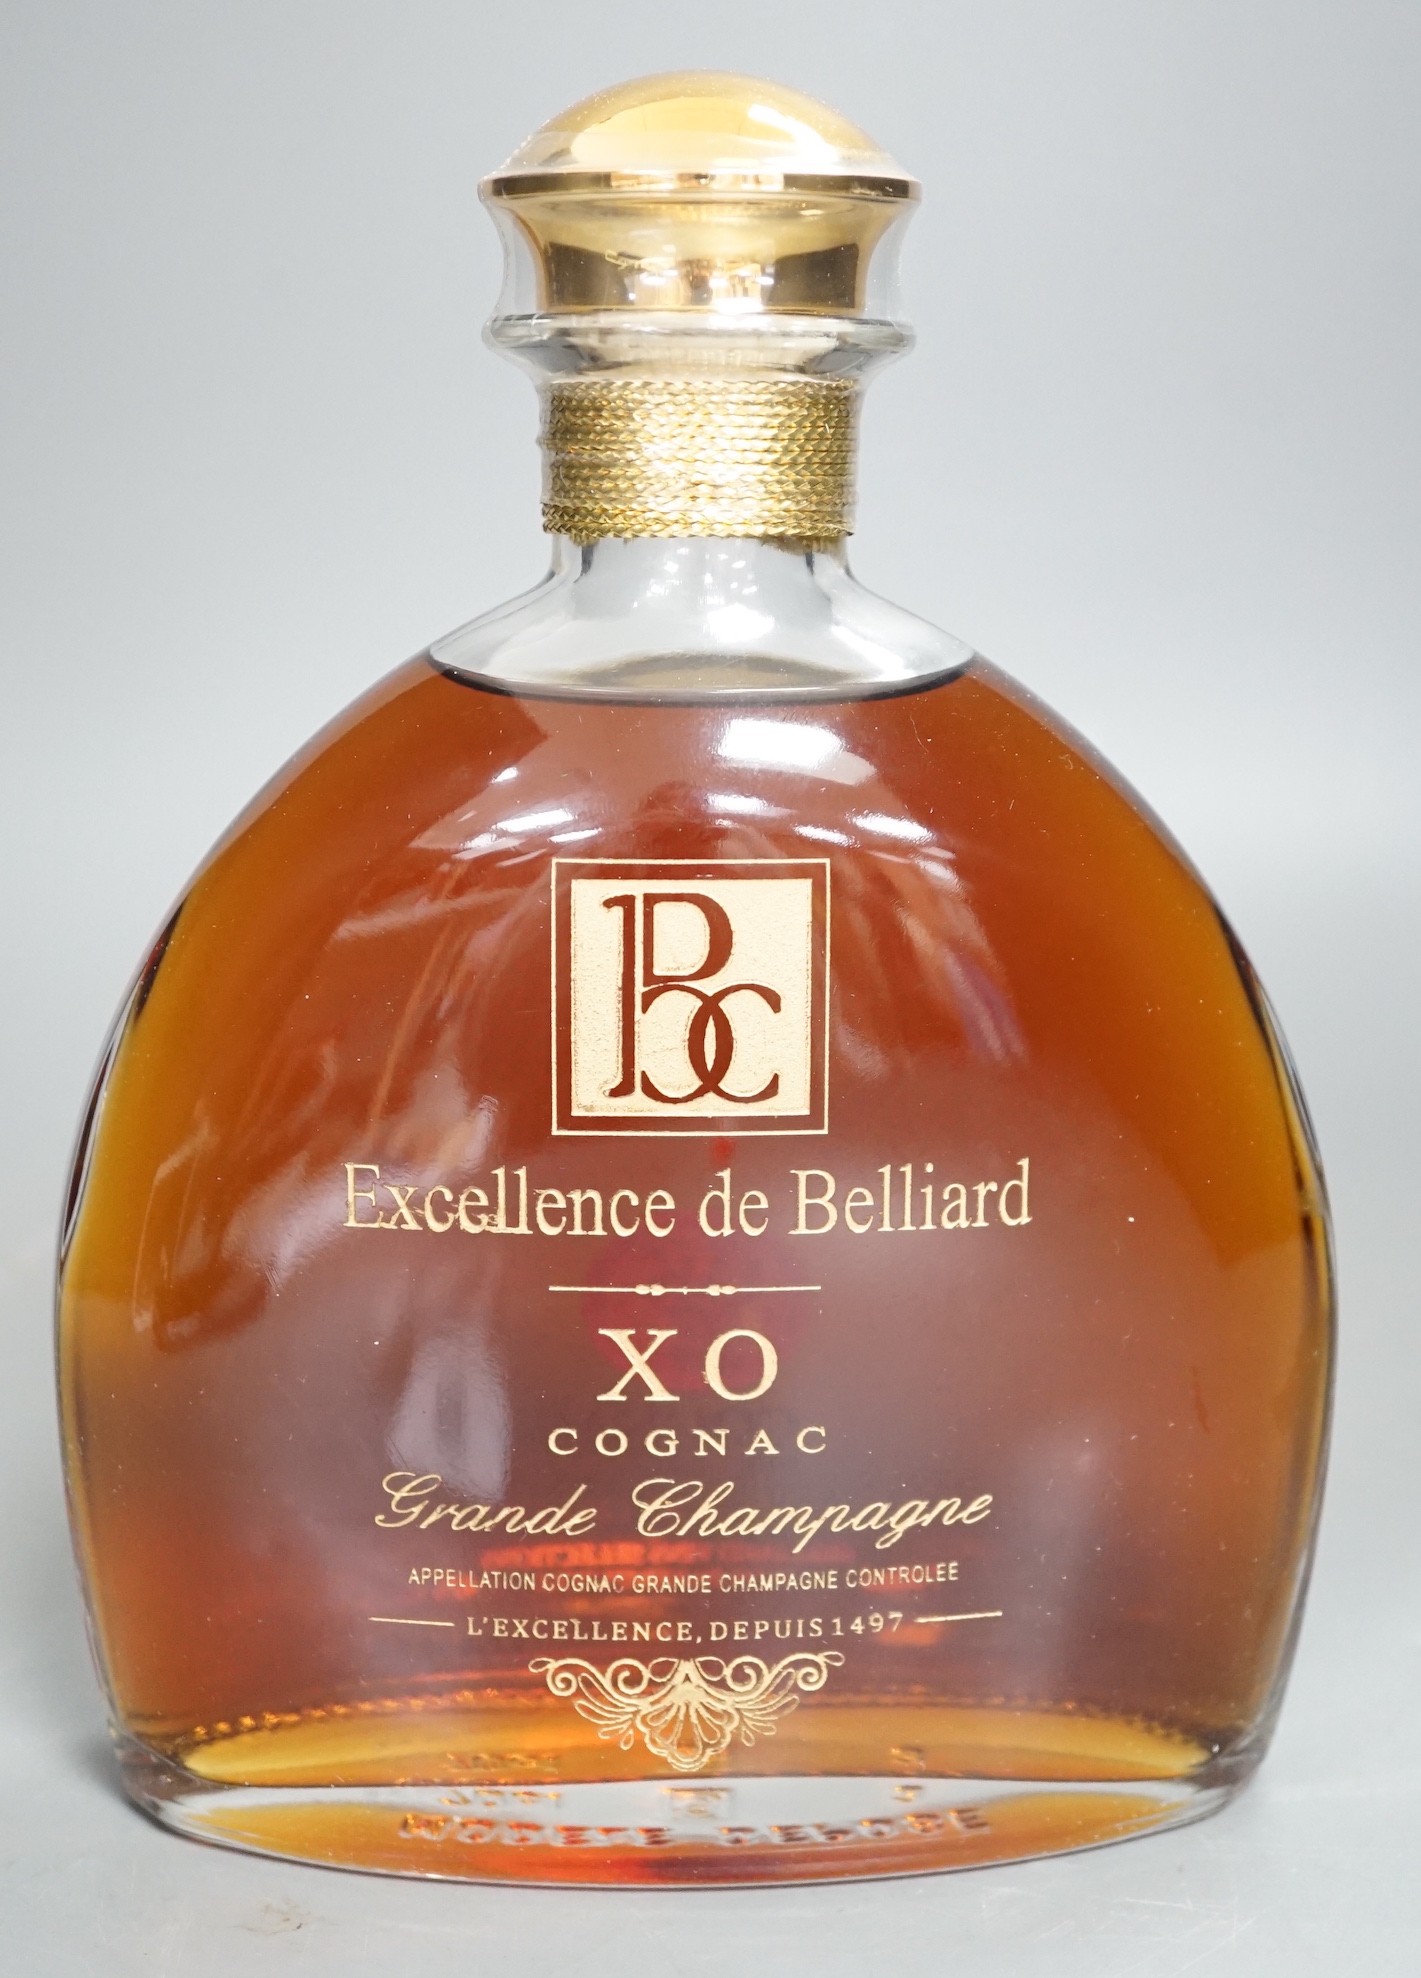 Two bottles of L'Excellence De Belliard Cognac XO each in wooden case (decanter bottle)